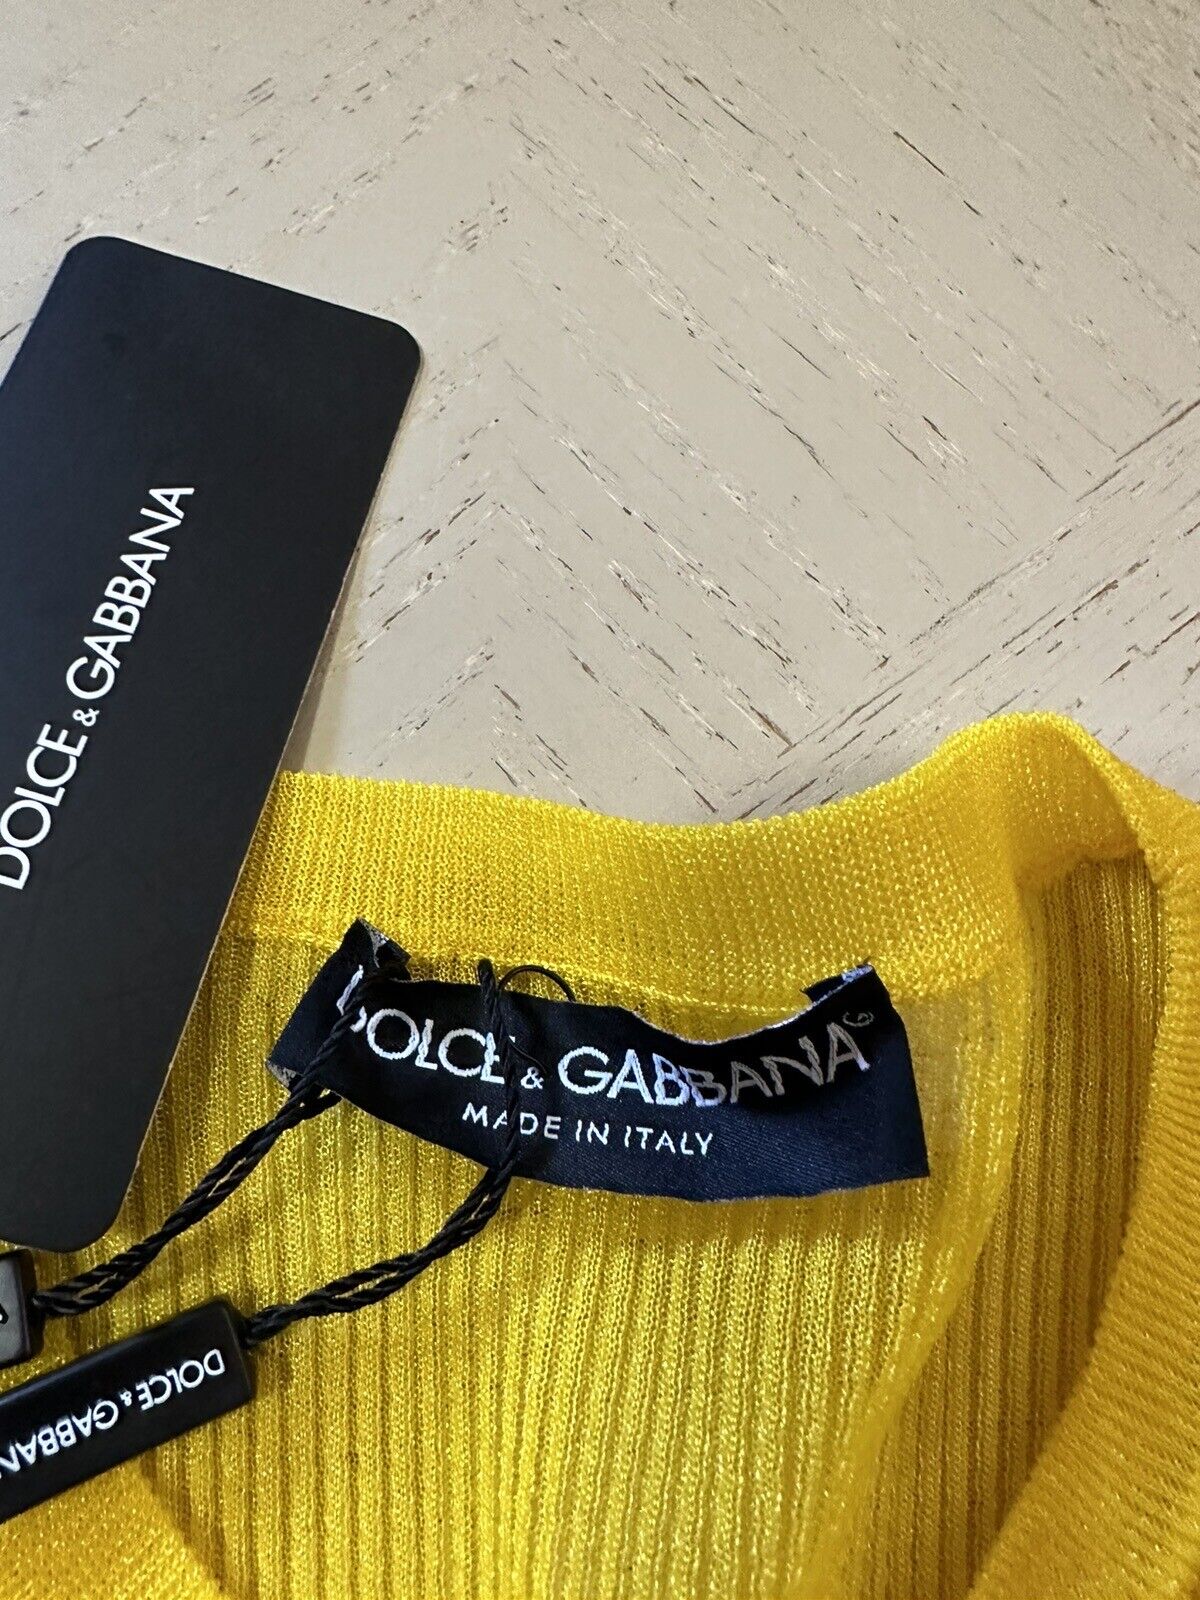 New $895 Dolce&Gabbana Capri Ribbed Long-Sleeve Top BRIGHT YELLOW 42/8